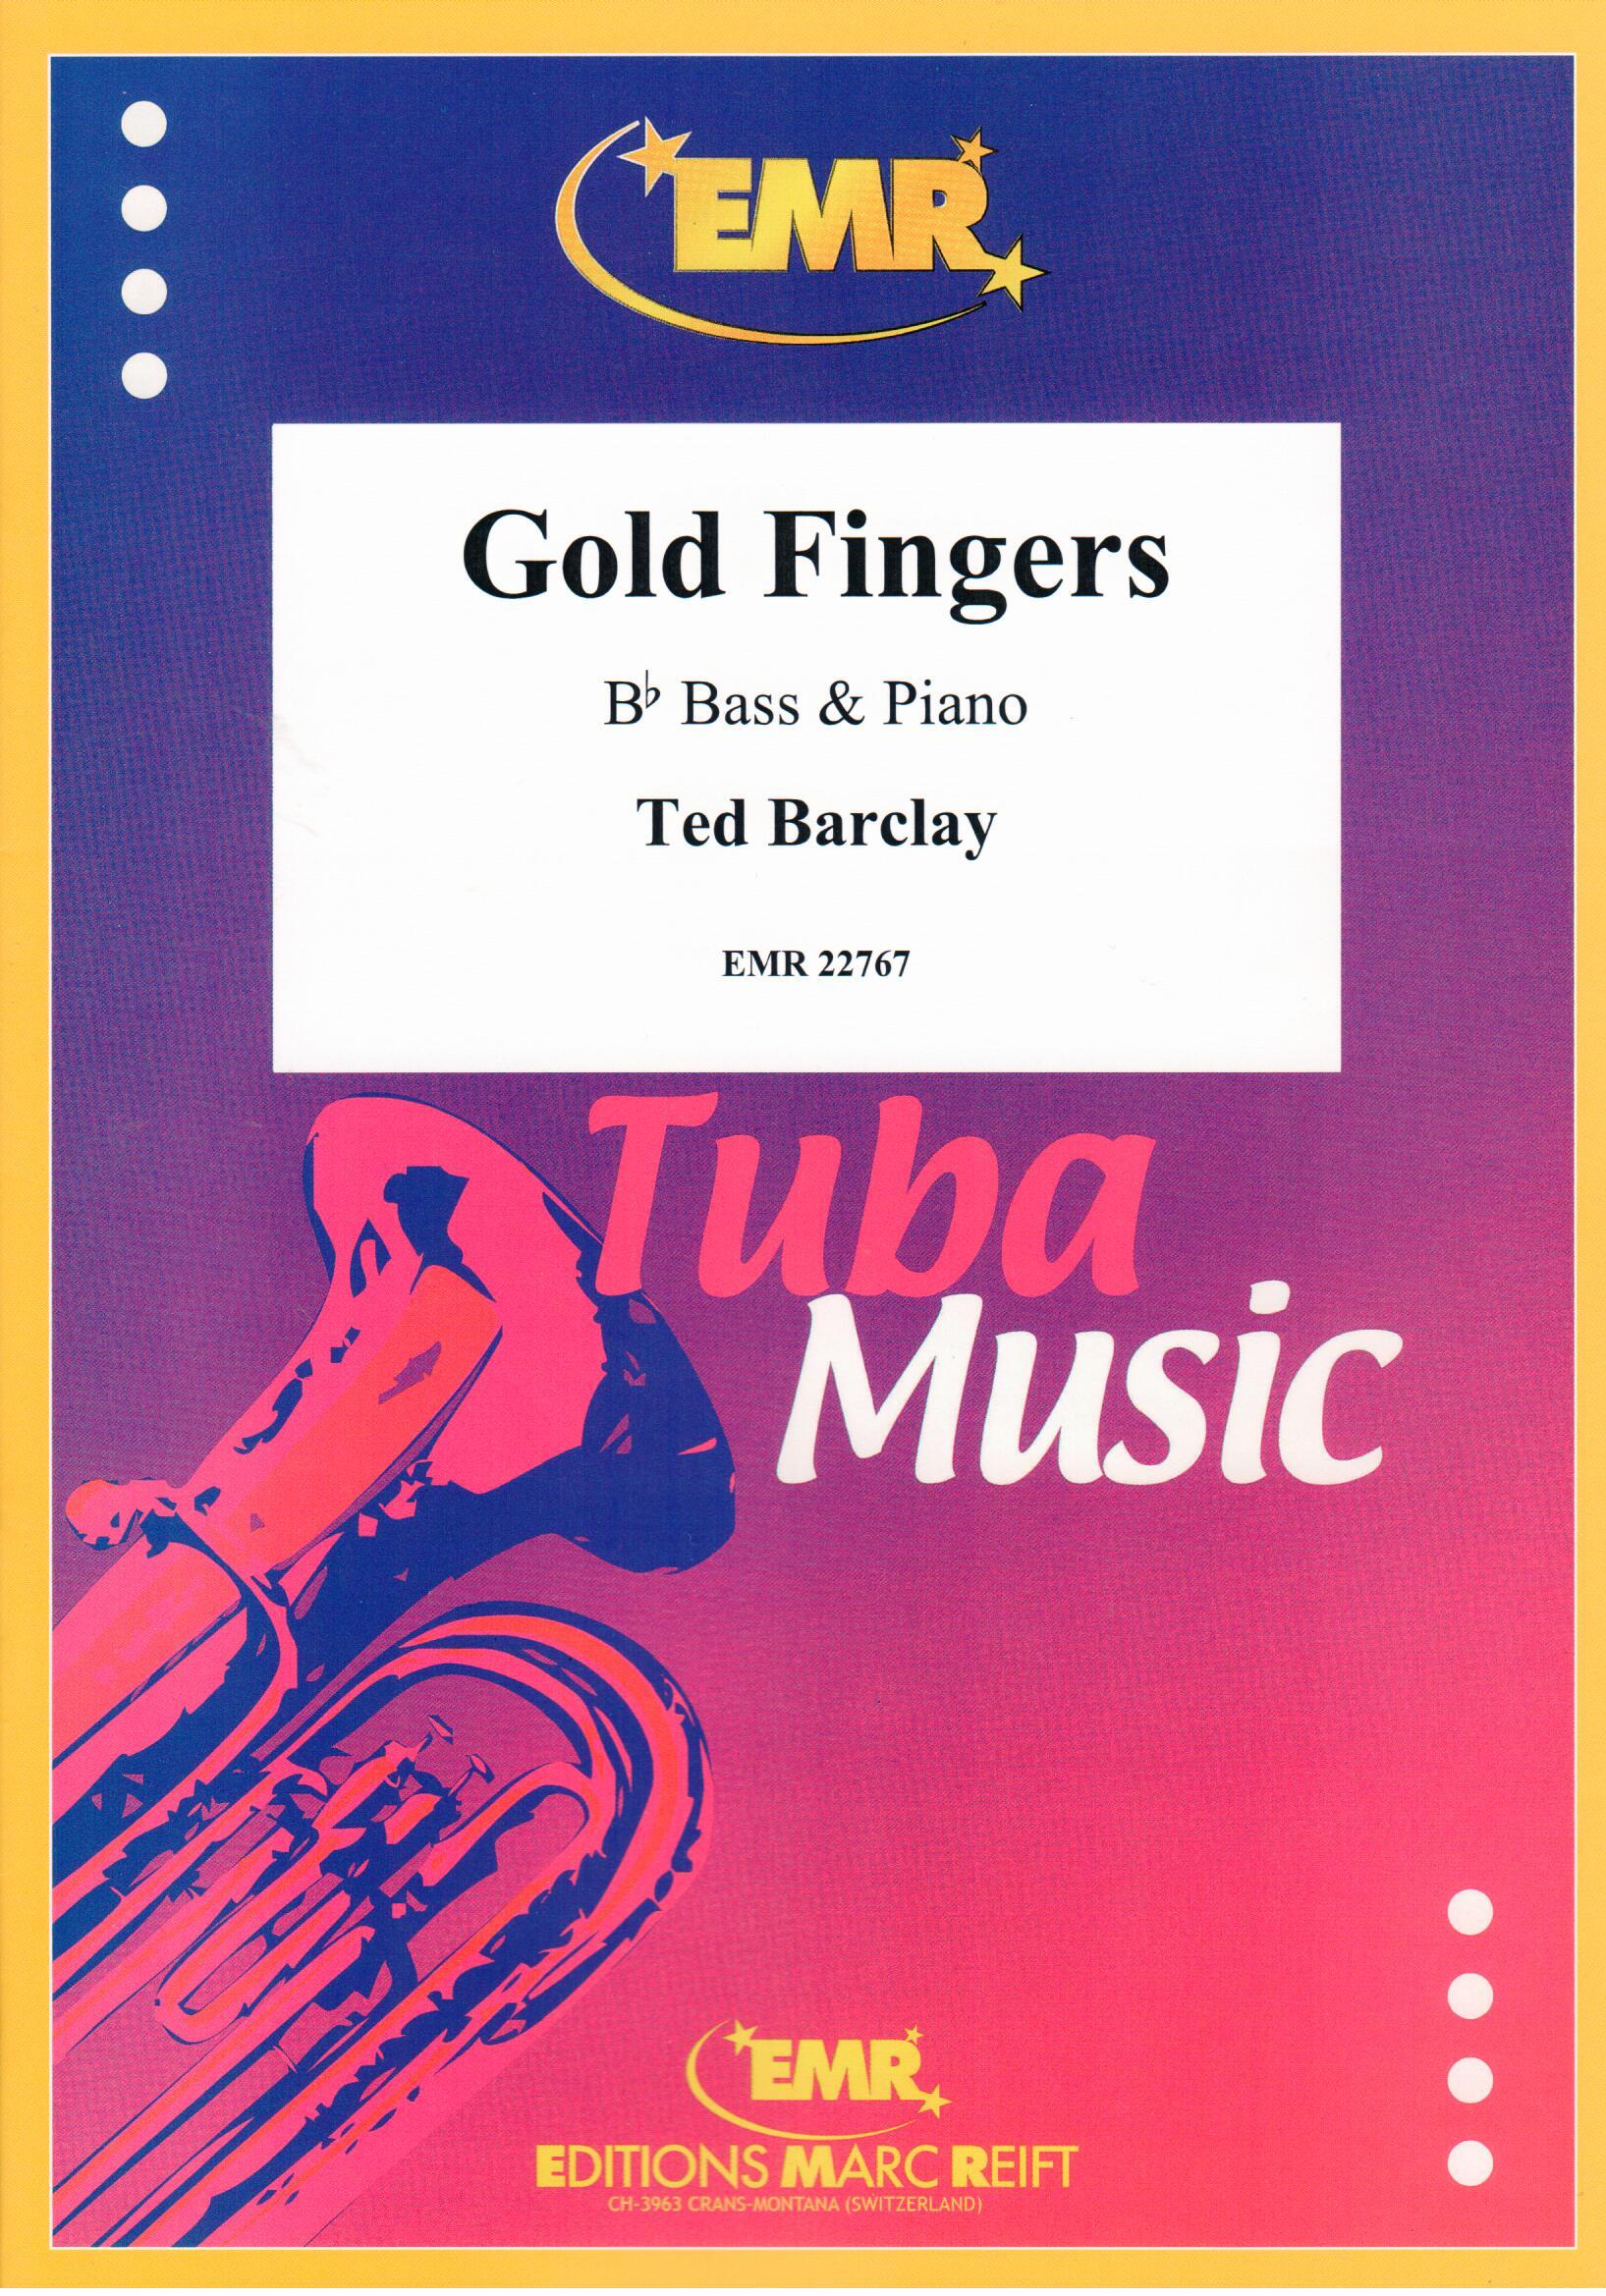 GOLD FINGERS, SOLOS - E♭. Bass